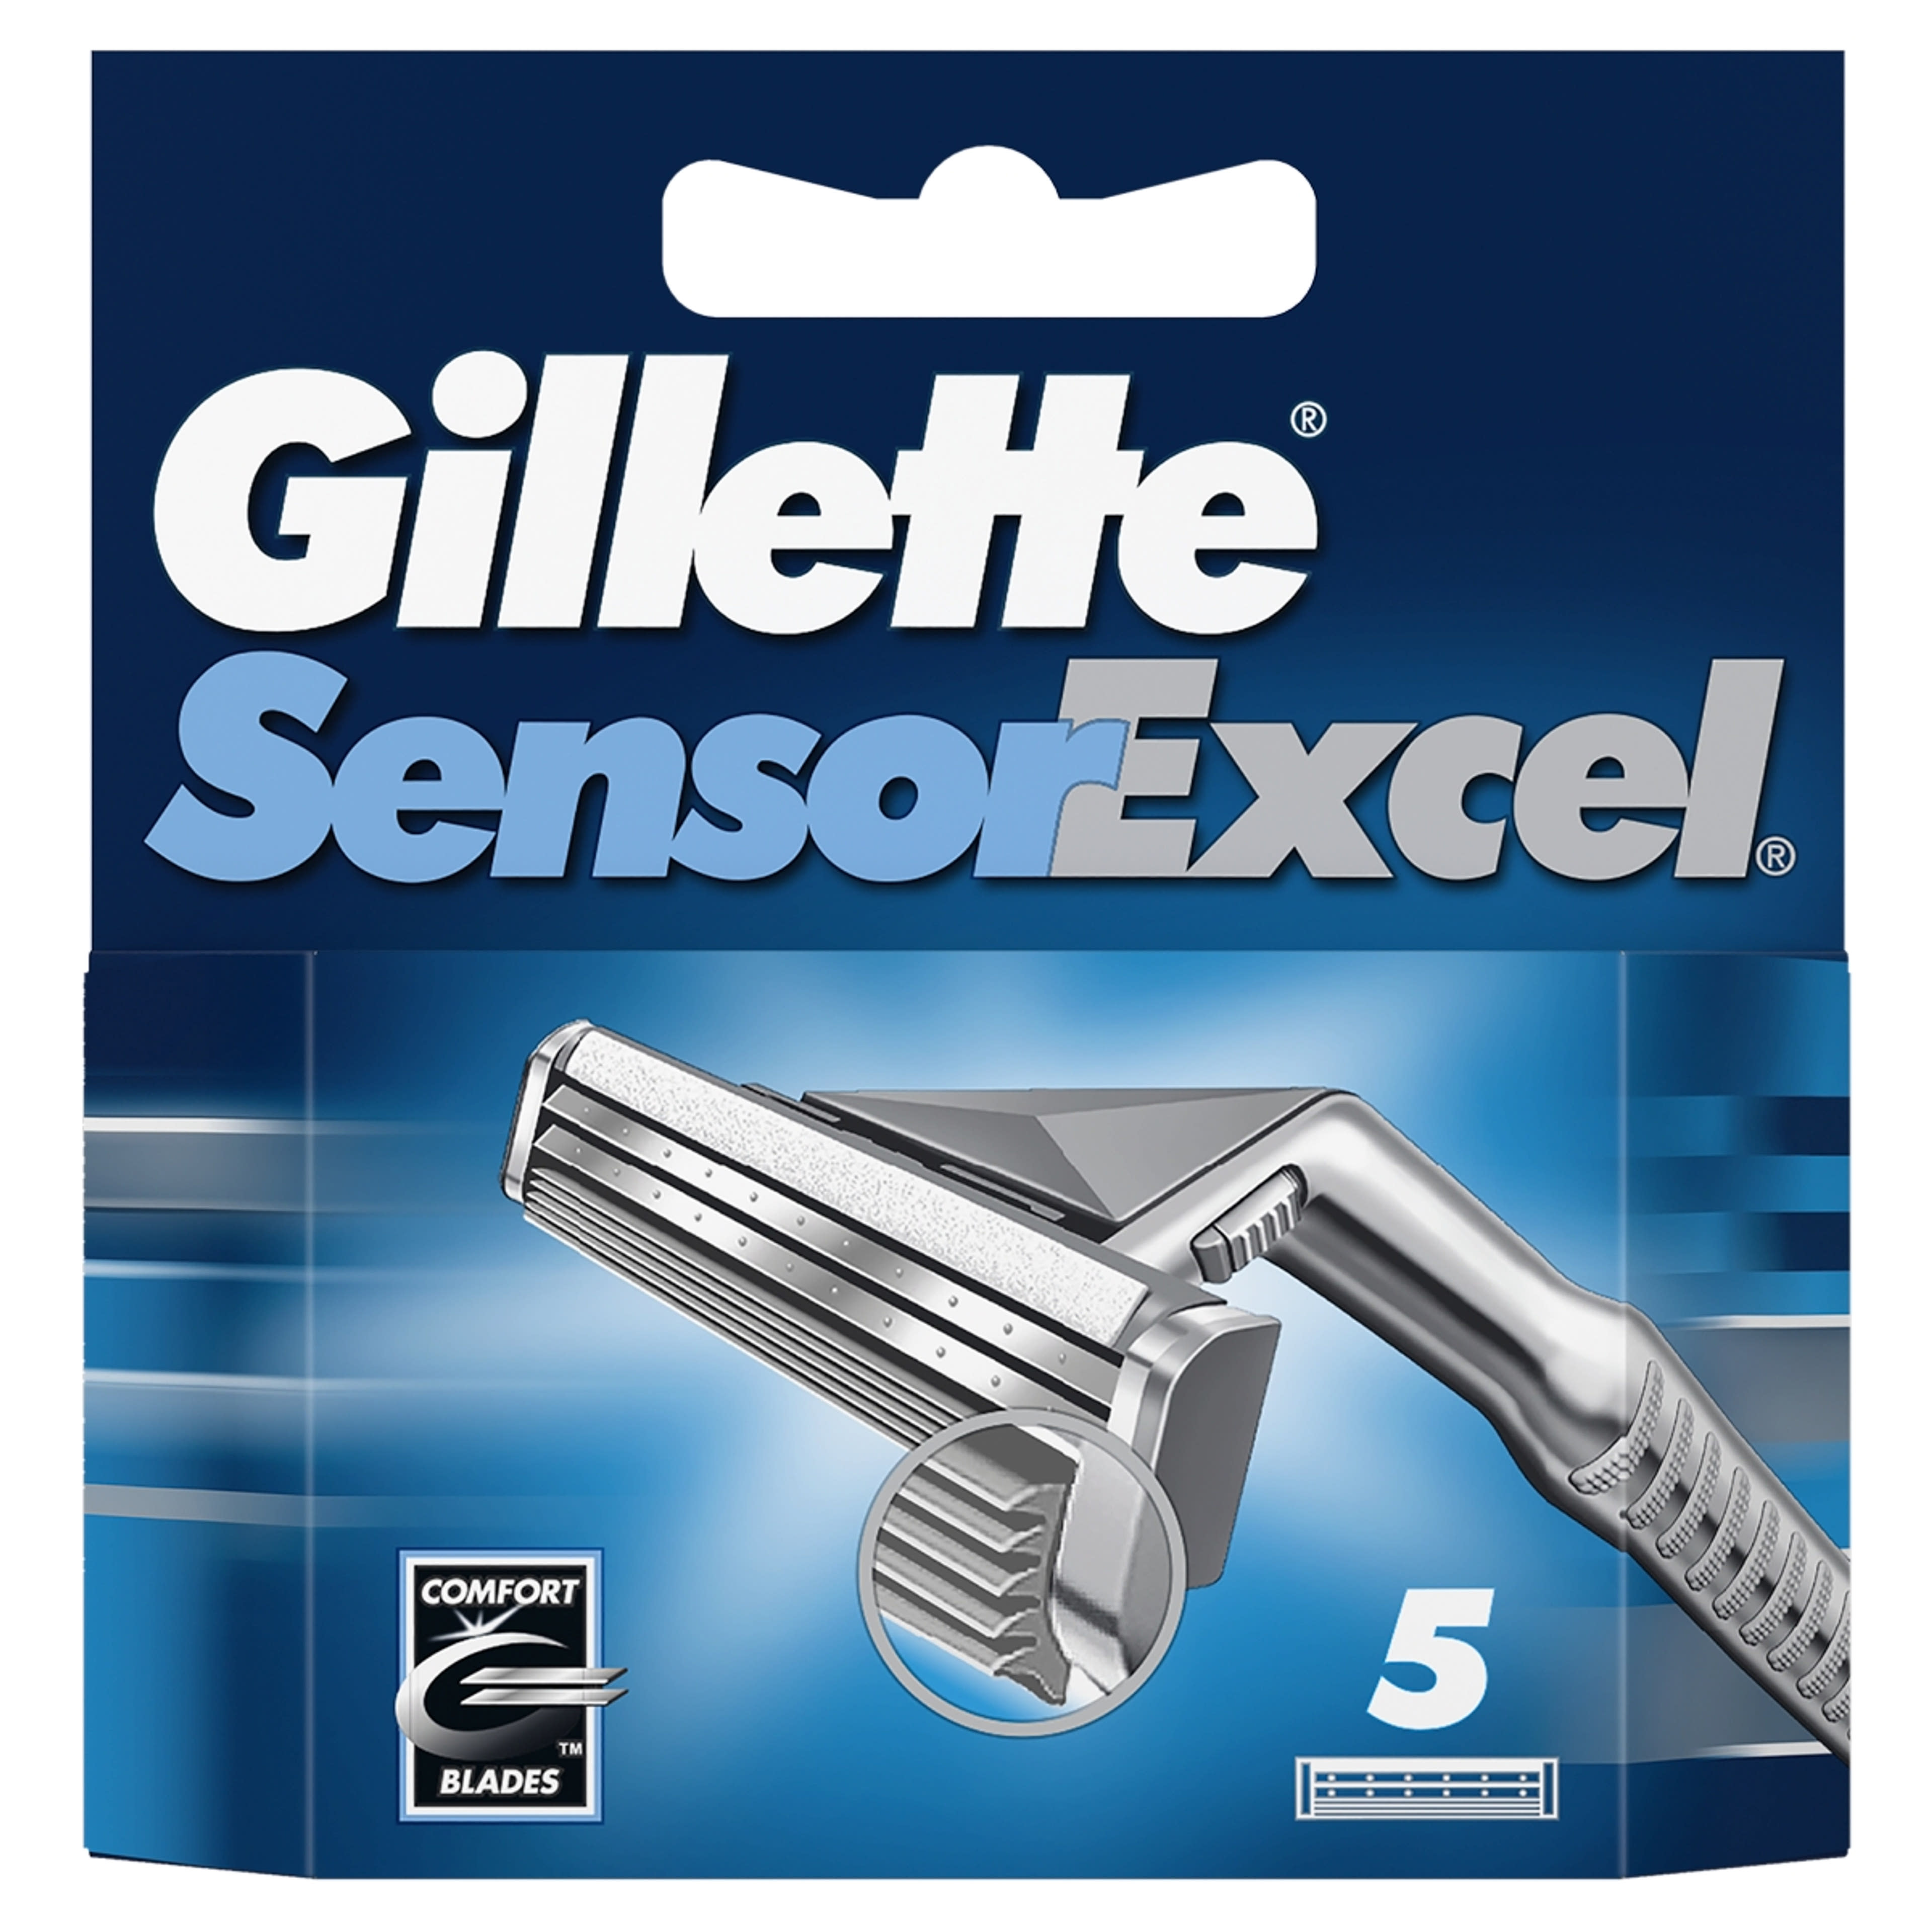 Gillette Sensor Excel borotva betét - 5 db